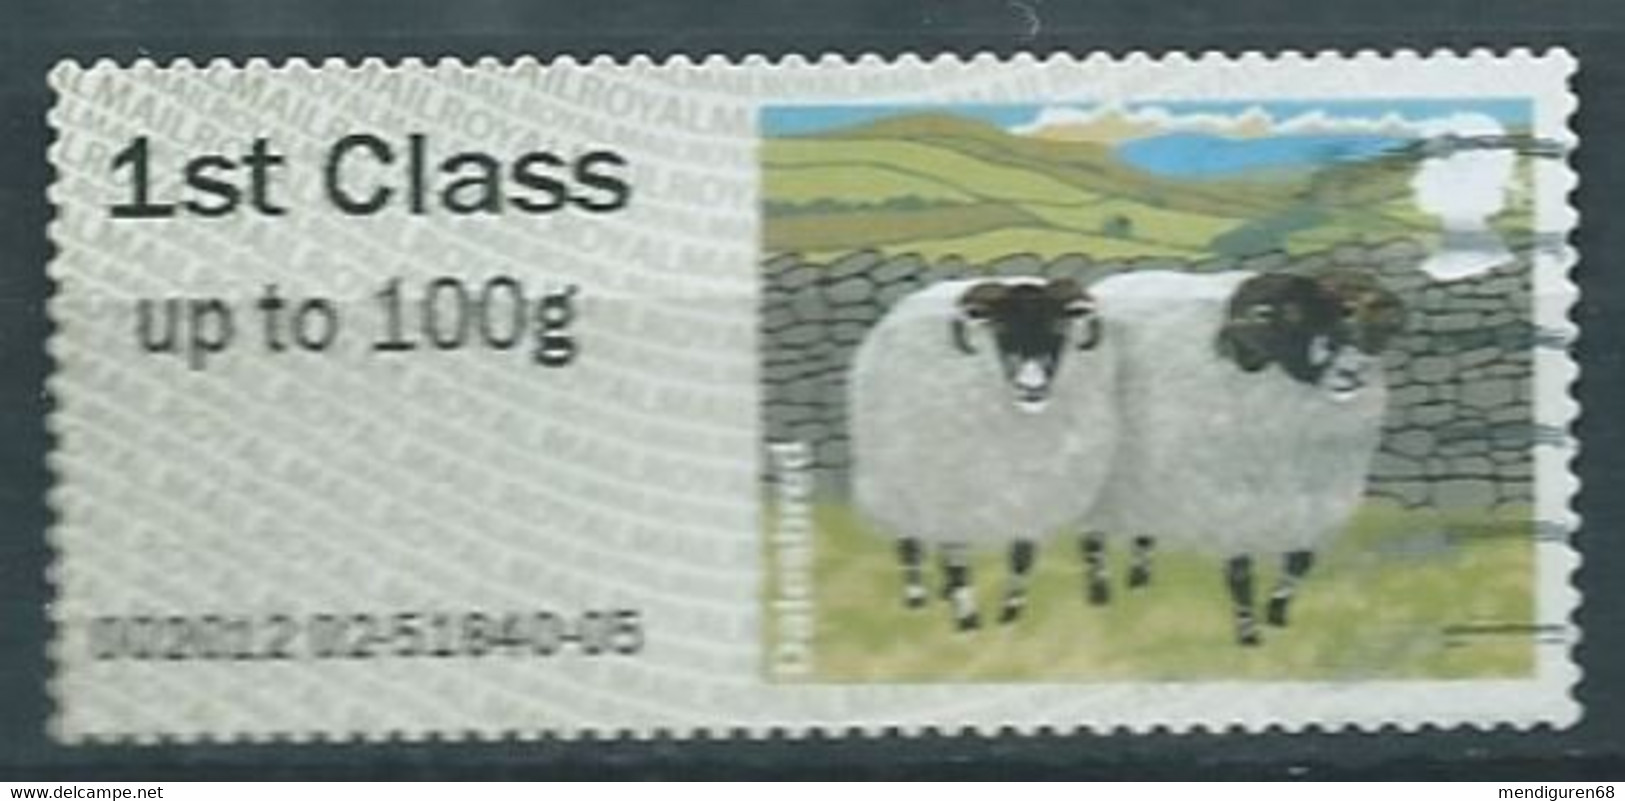 GROSBRITANNIEN GRANDE BRETAGNE GB 2012 POST&GO SHEEP:DALESBRED 1ST CLASS Up To 10g USED PAPER SG TD 30 MI ATM 2 YT TD28 - Post & Go (automatenmarken)